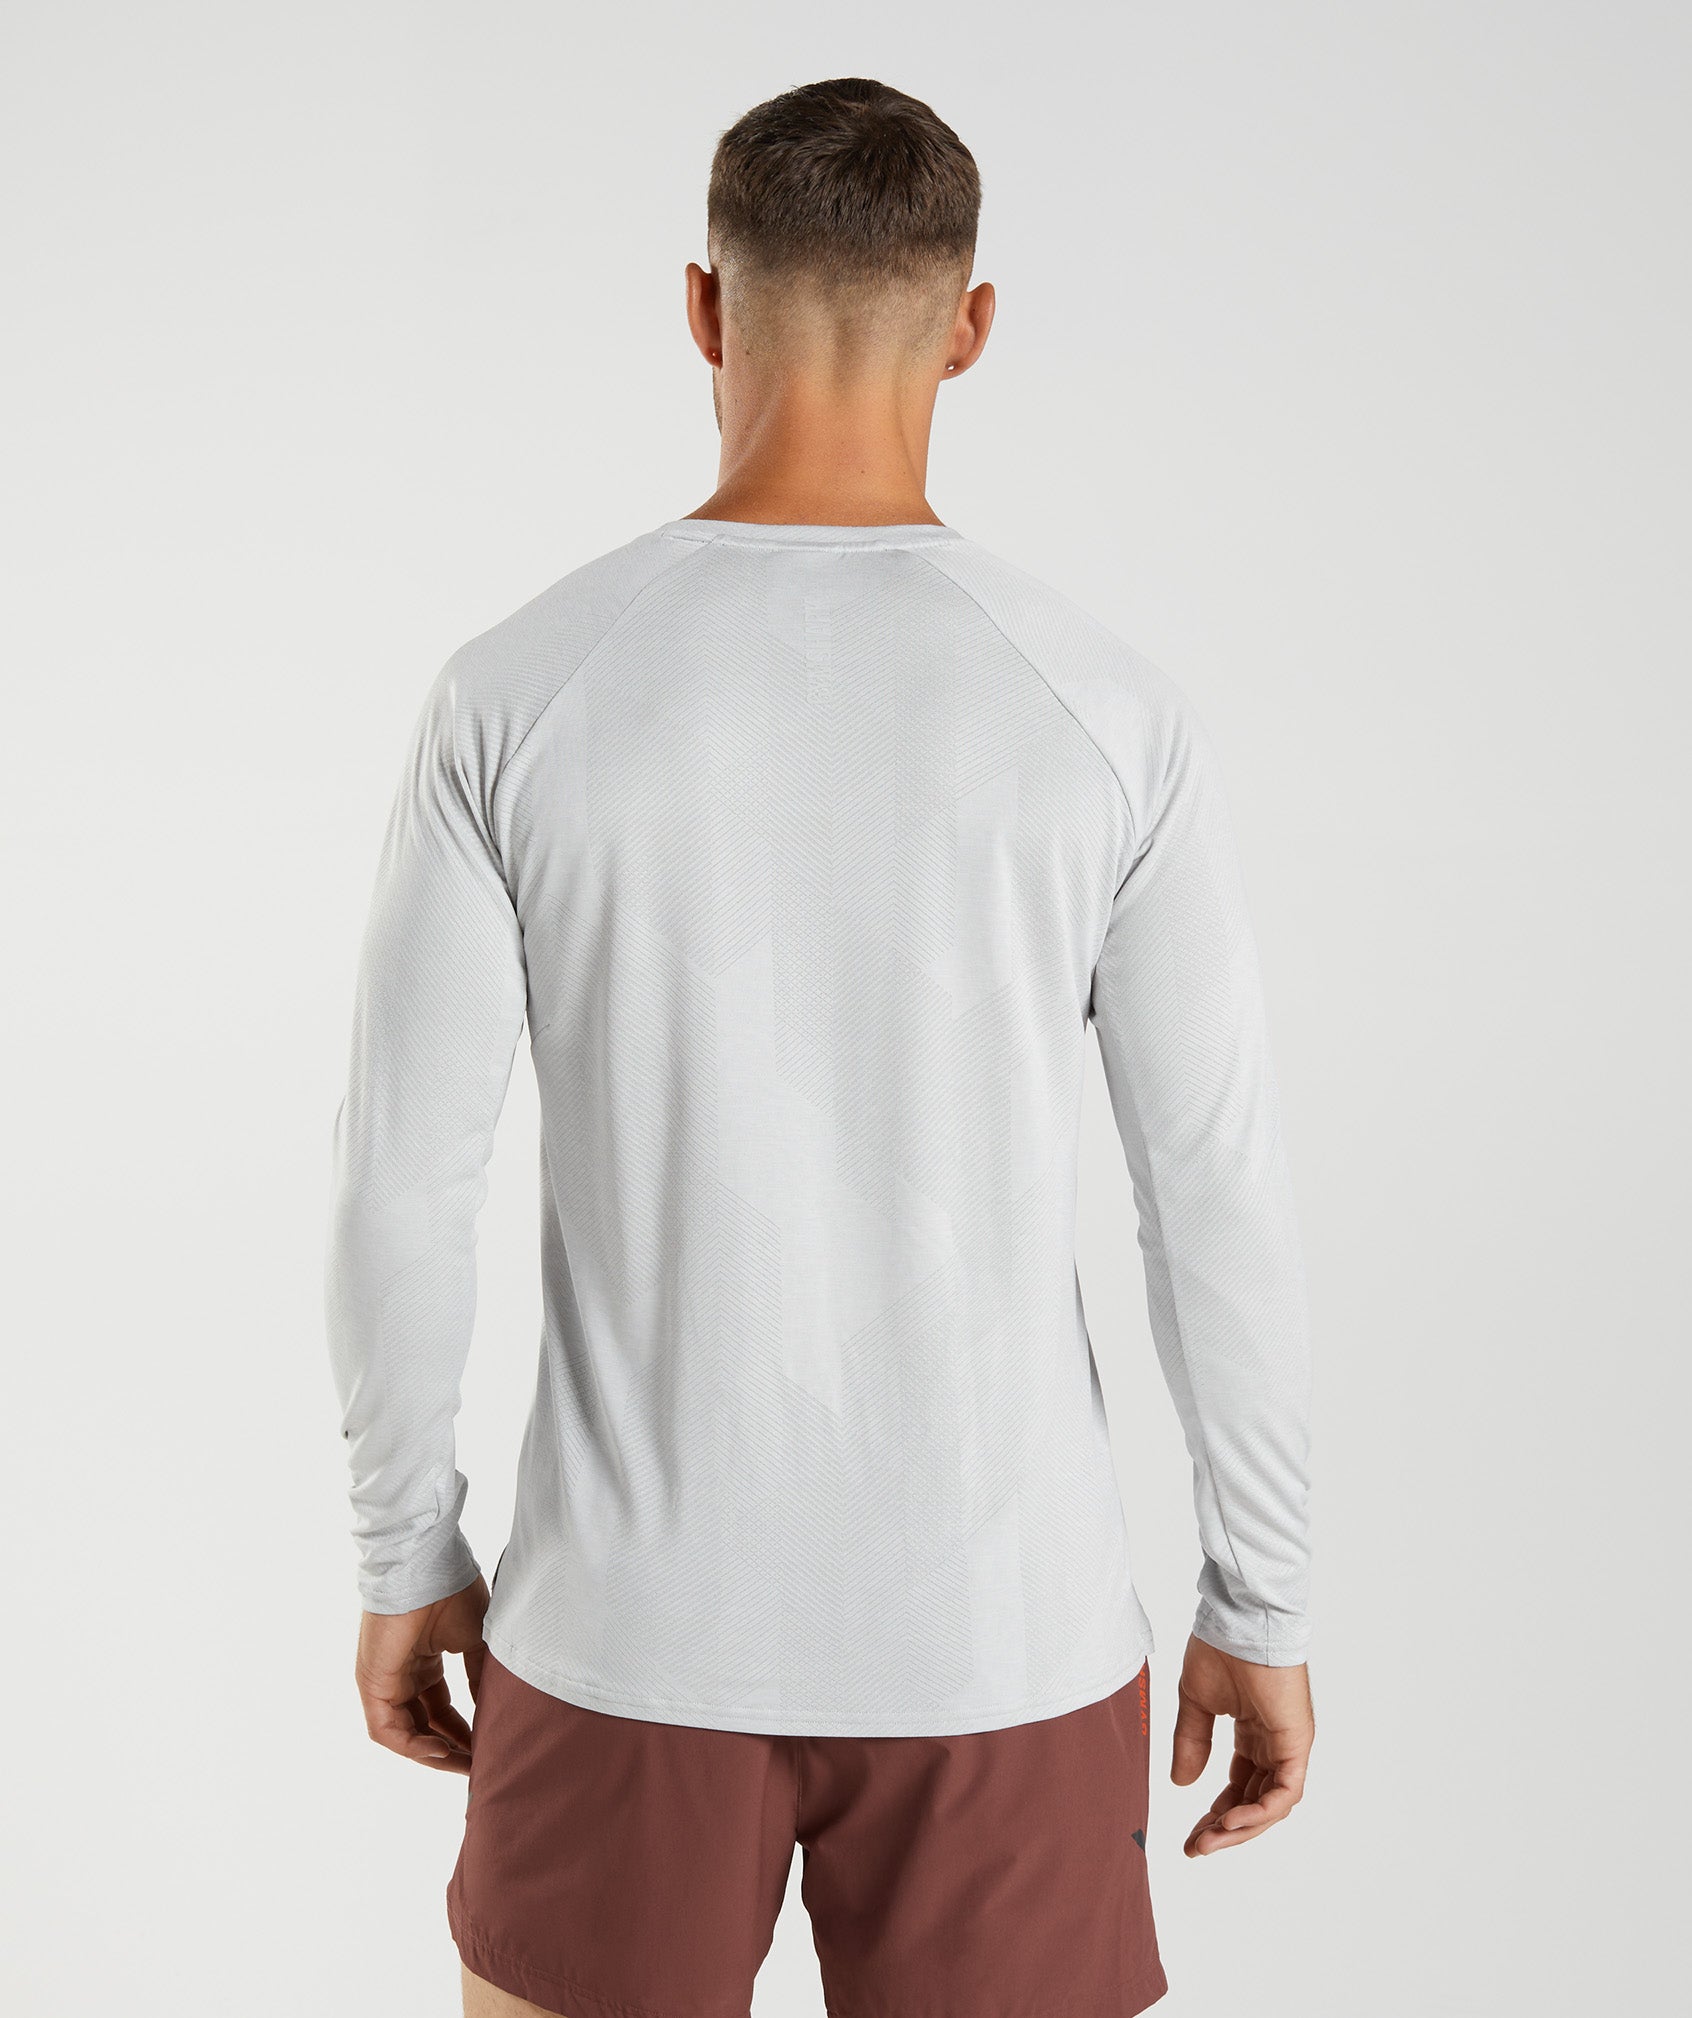 Apex Long Sleeve T-Shirt in Light Grey/White